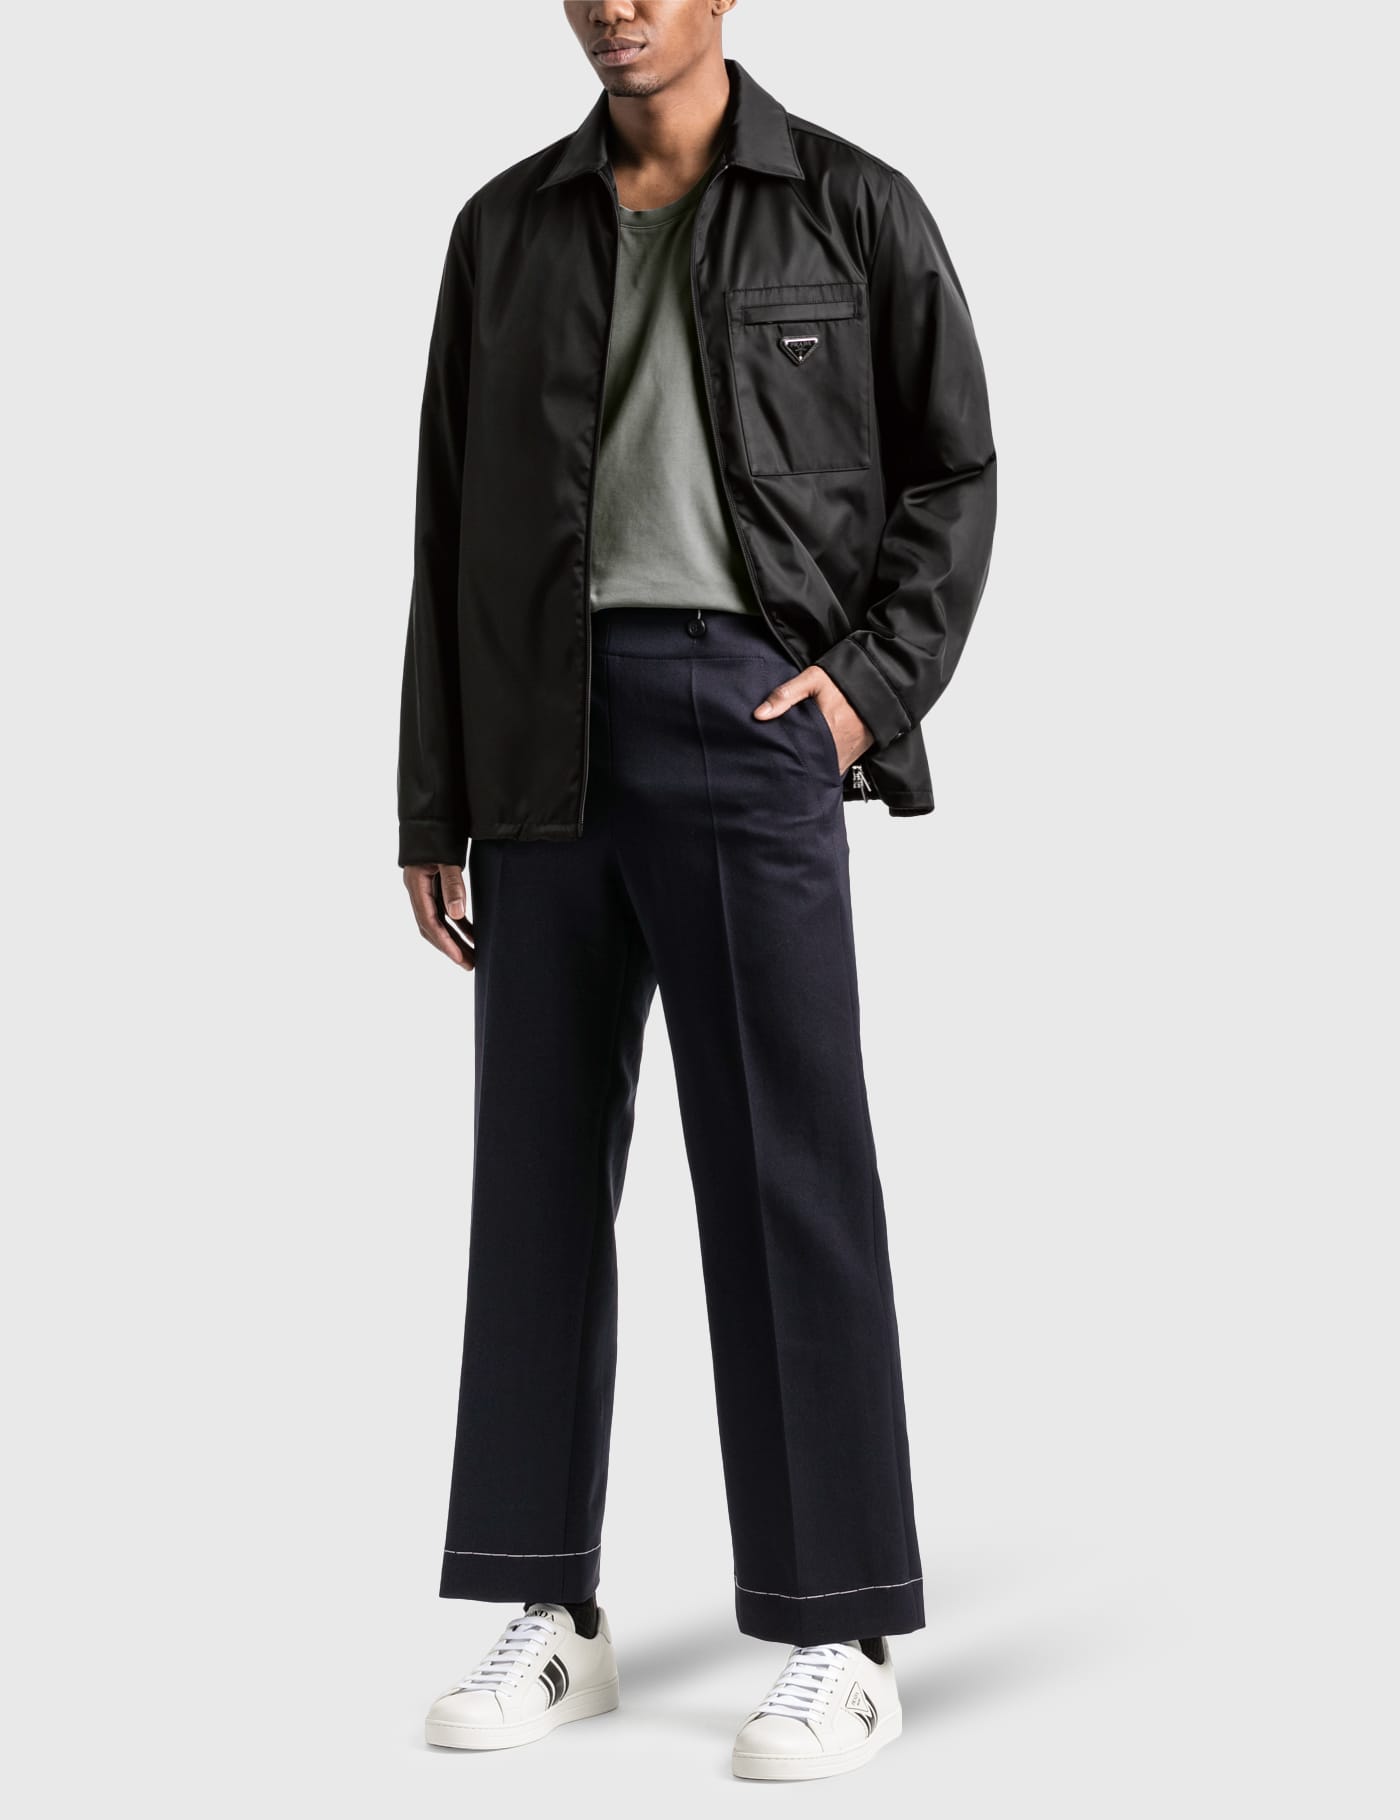 Prada - Re-Nylon Zip Up Jacket | HBX - Globally Curated Fashion 